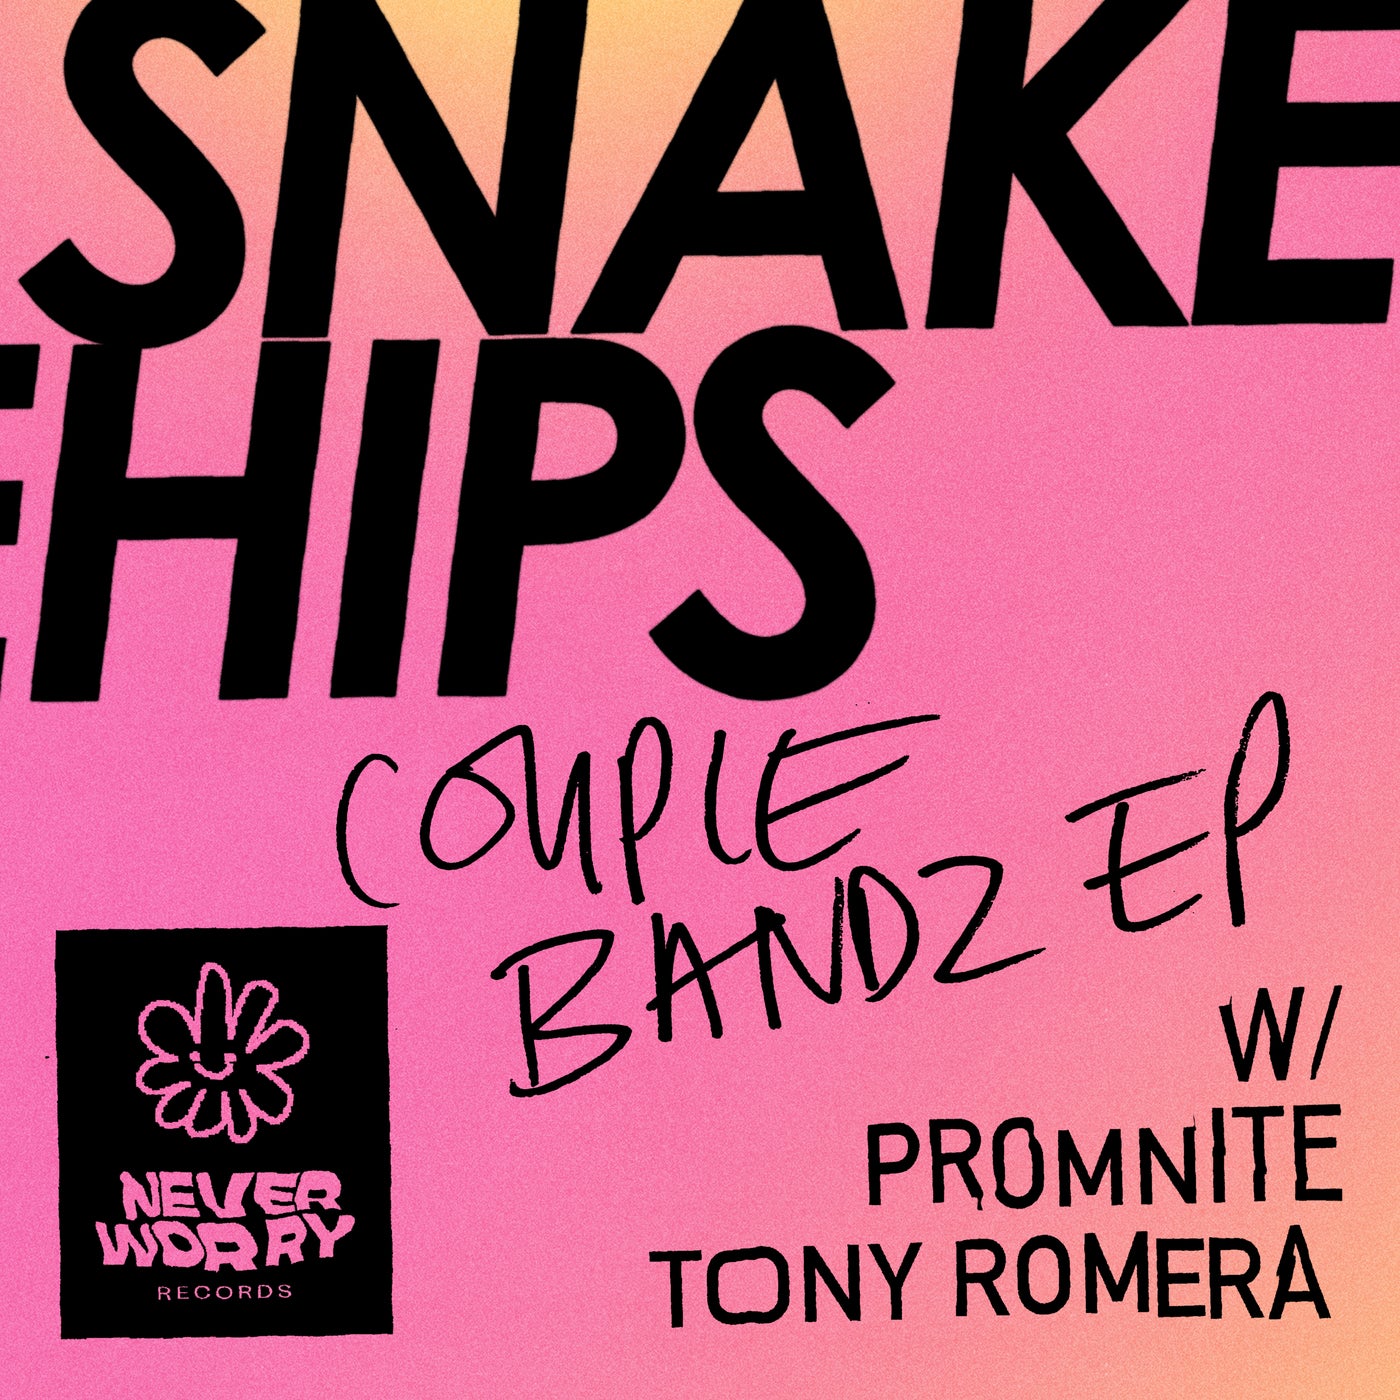 Snakehips & Promnite — Couple Bandz cover artwork